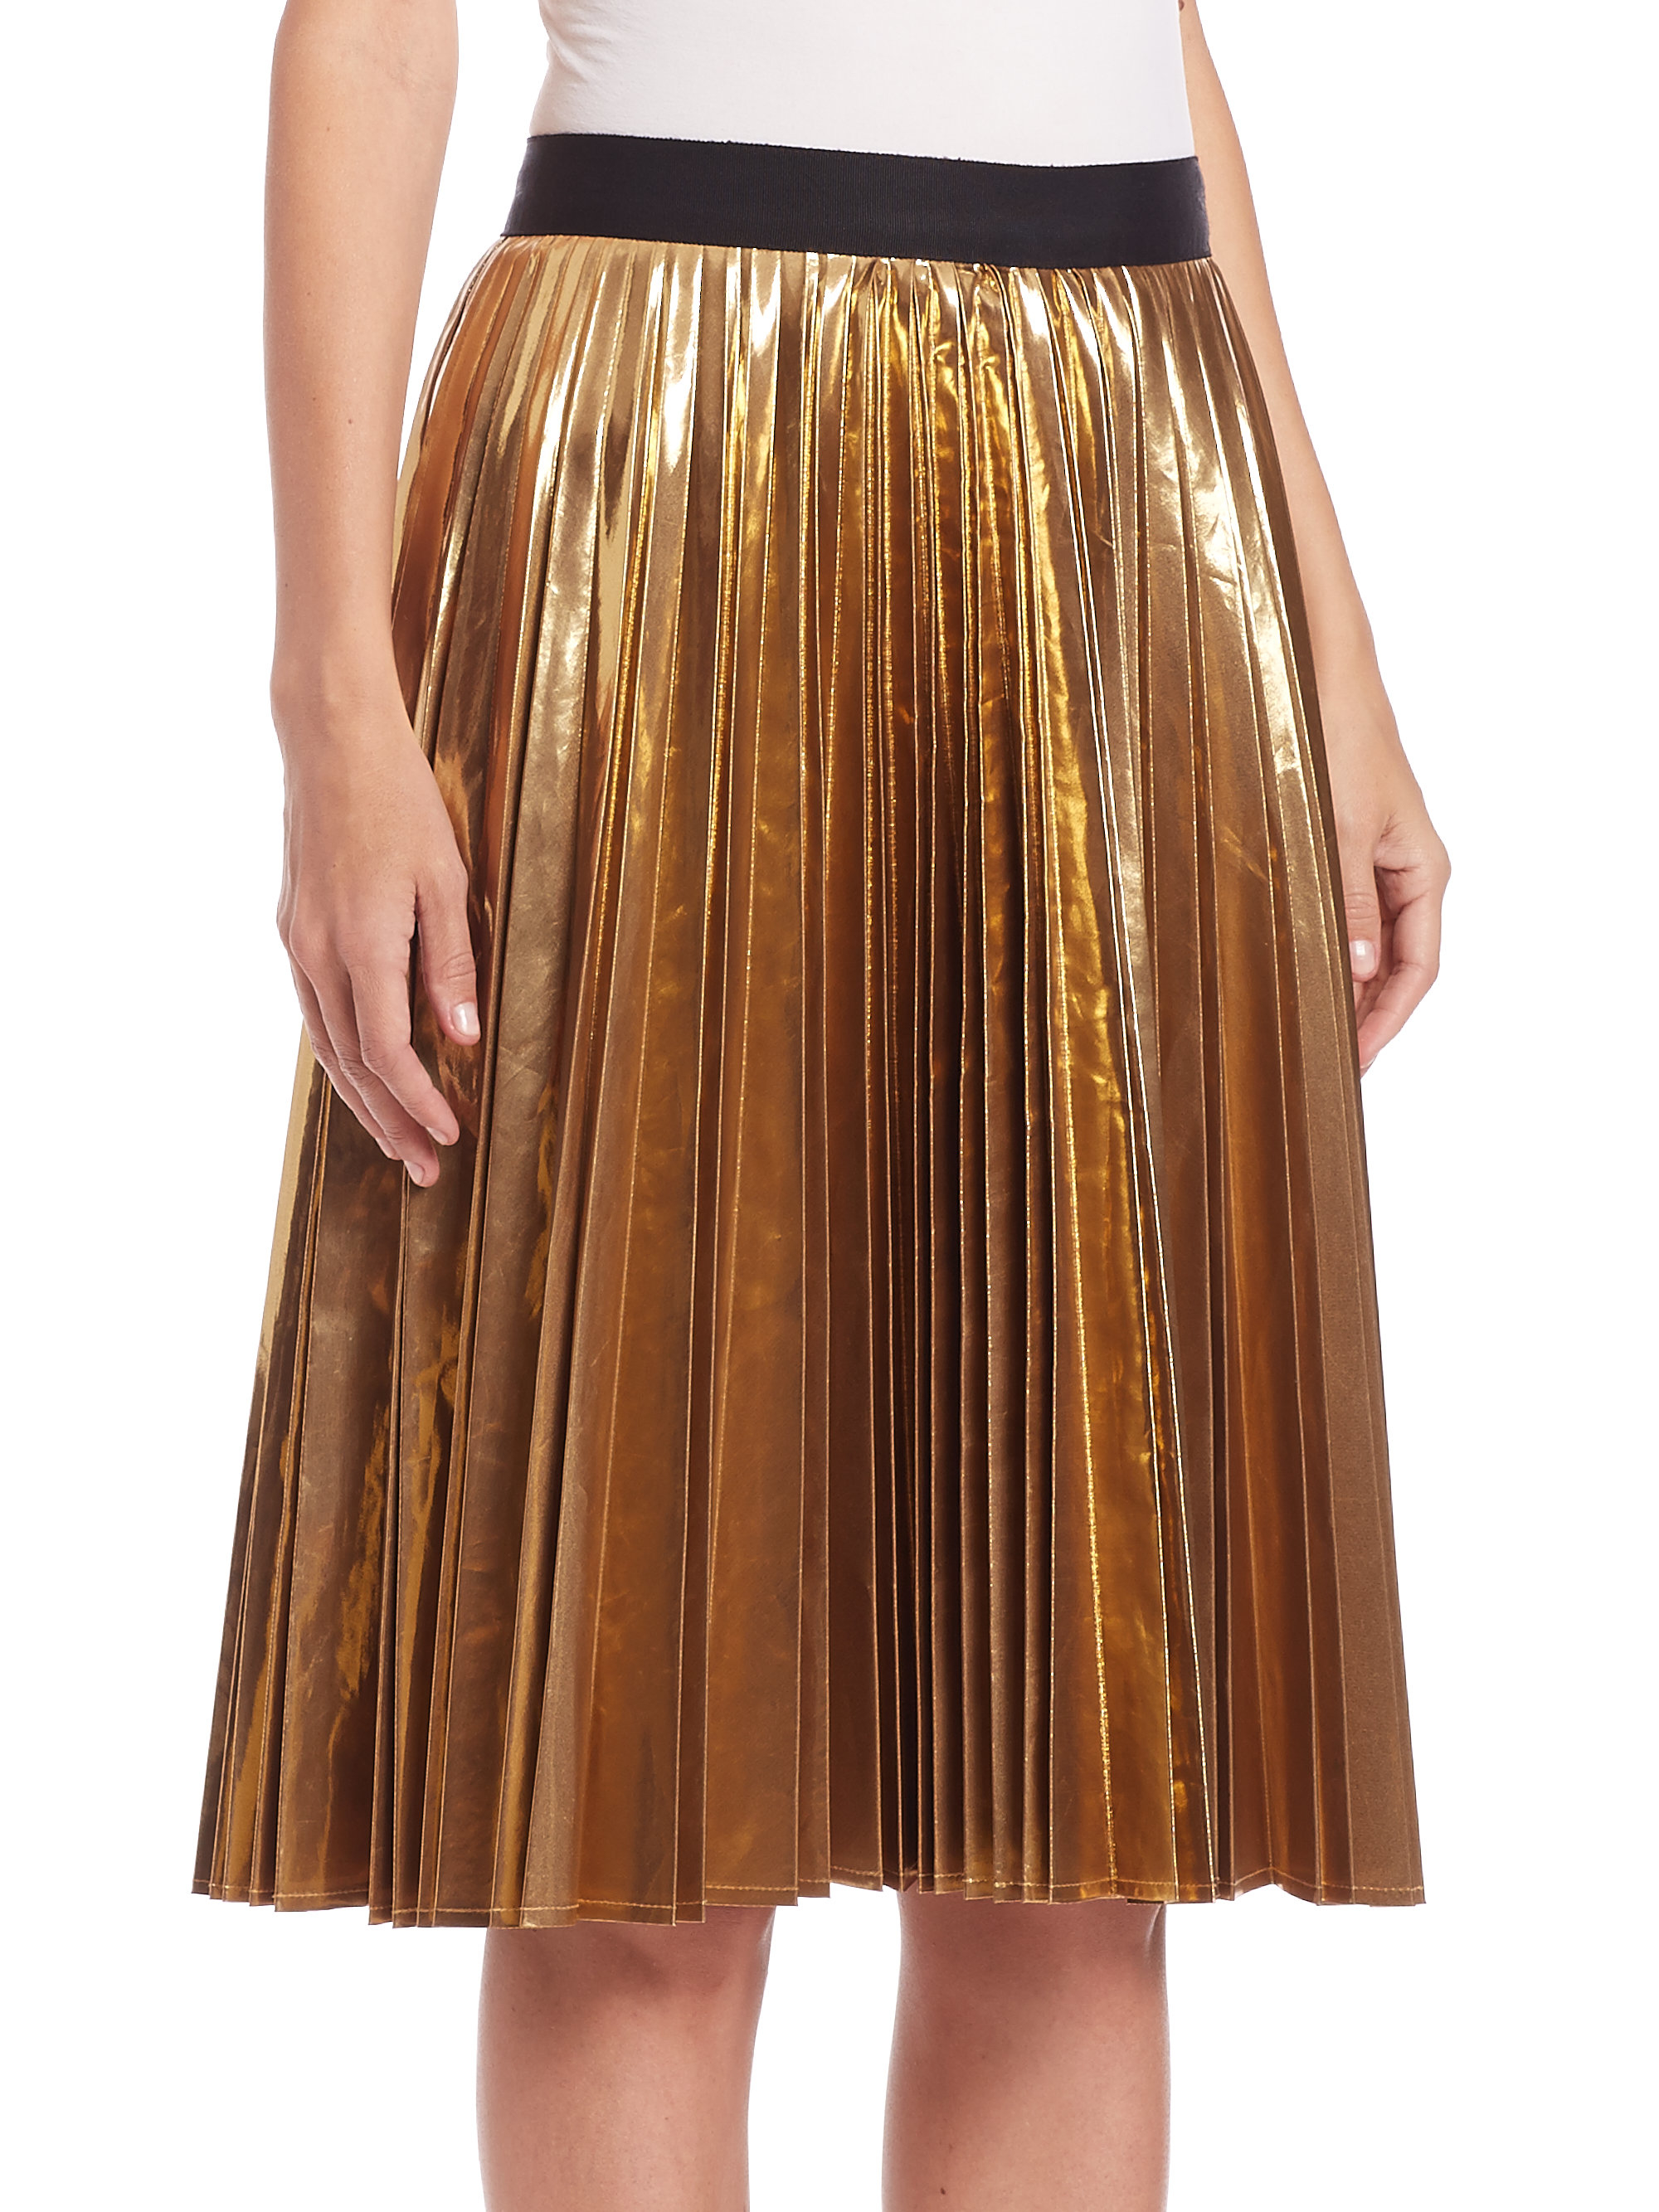 Dkny Metallic Pleated Skirt in Metallic | Lyst